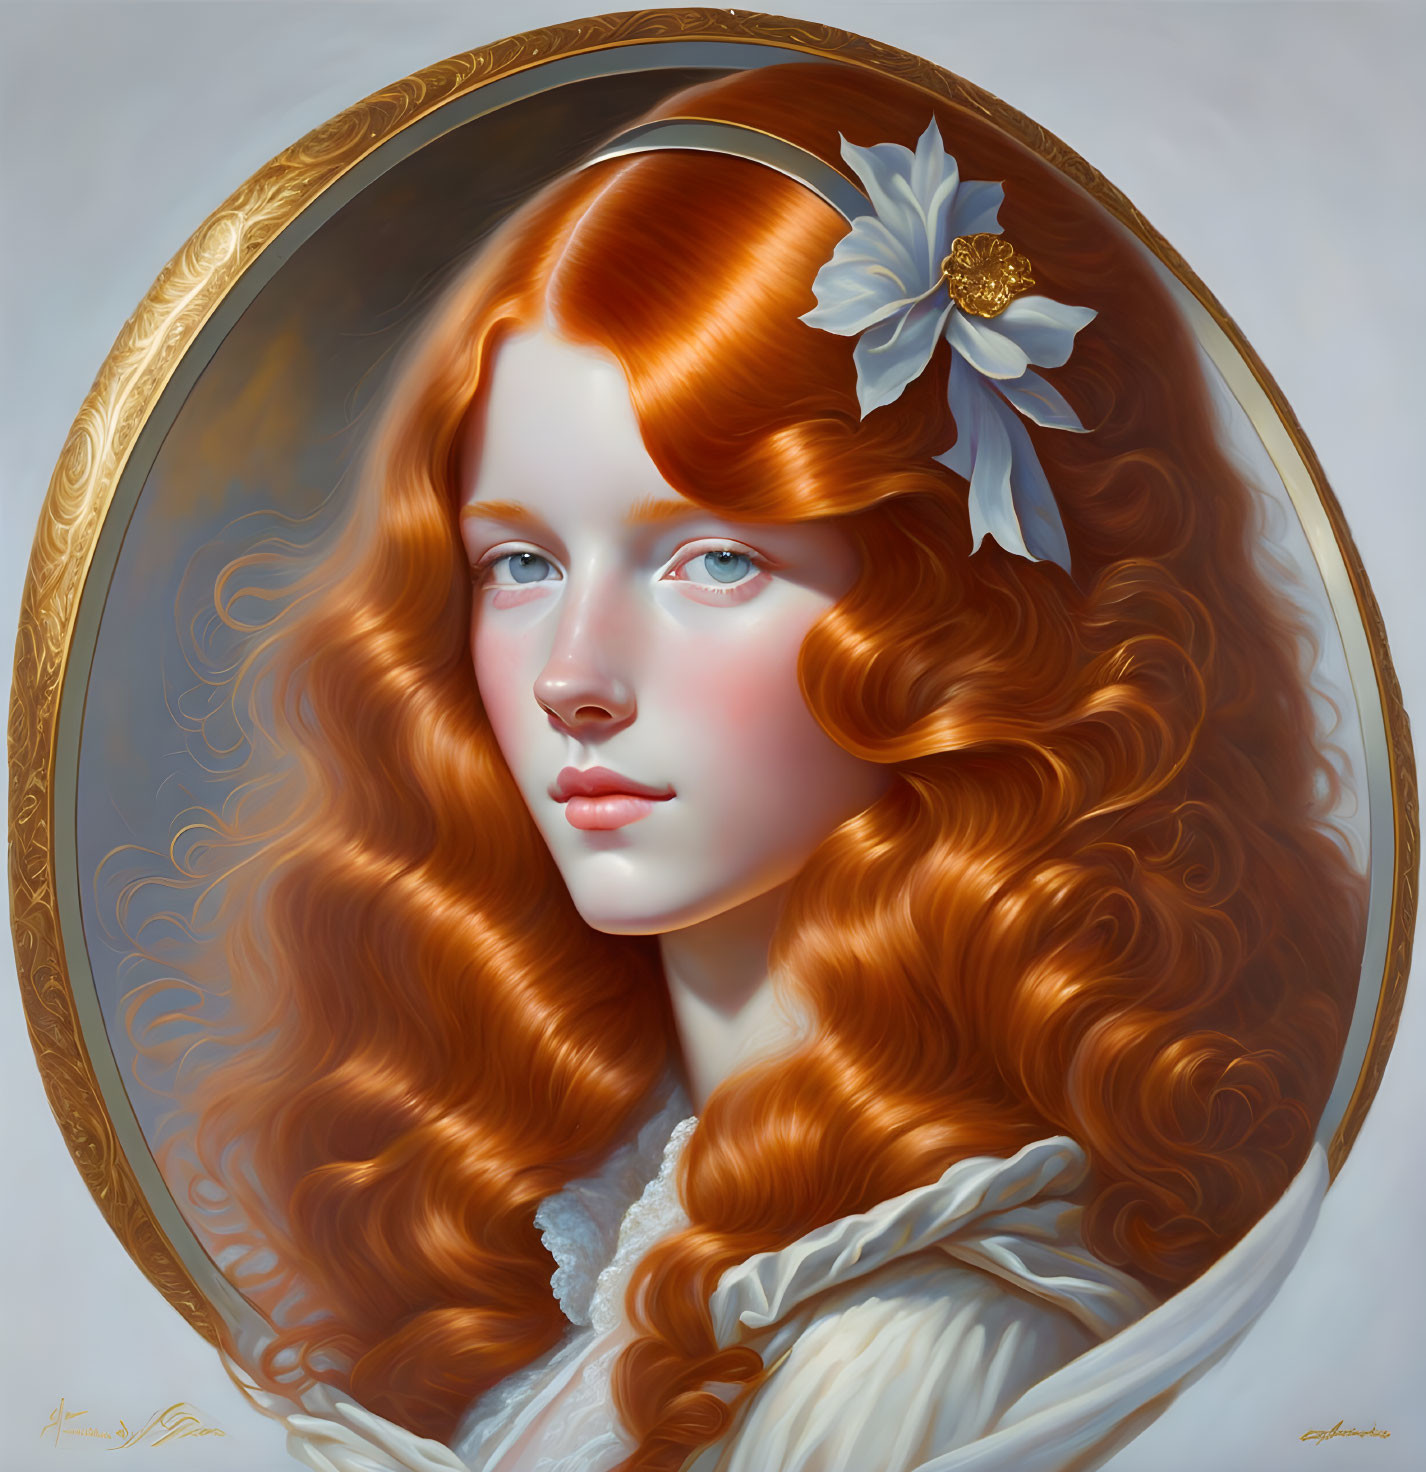 Portrait of a redhead